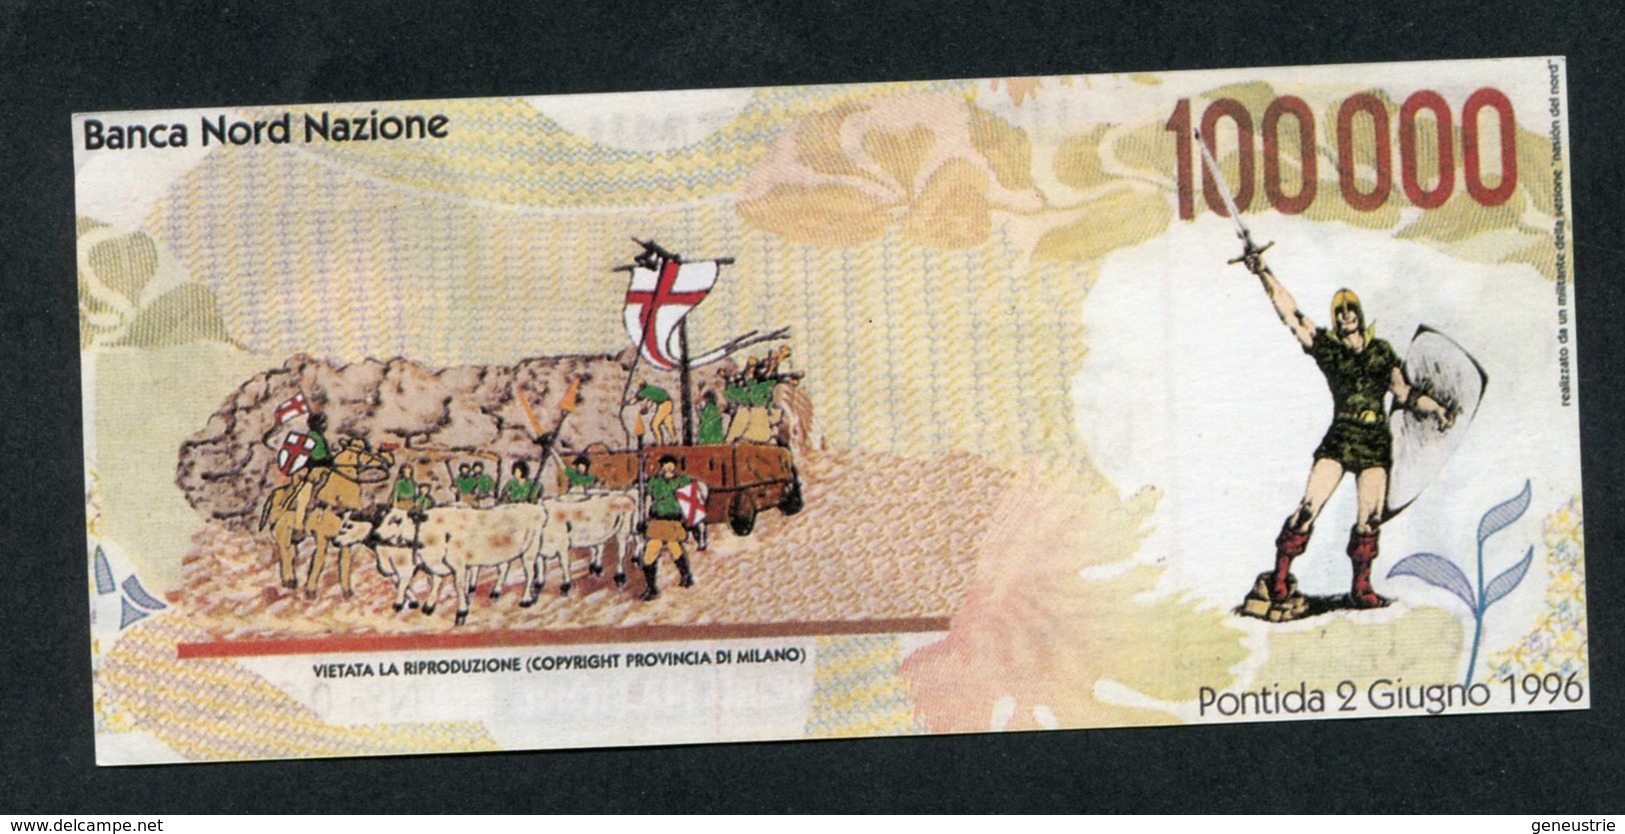 Billet De Banque 1996 Ligue Du Nord "100000 Cincentmila - Banca Della Padania Libera E Independente" Italie - [ 8] Fictifs & Specimens